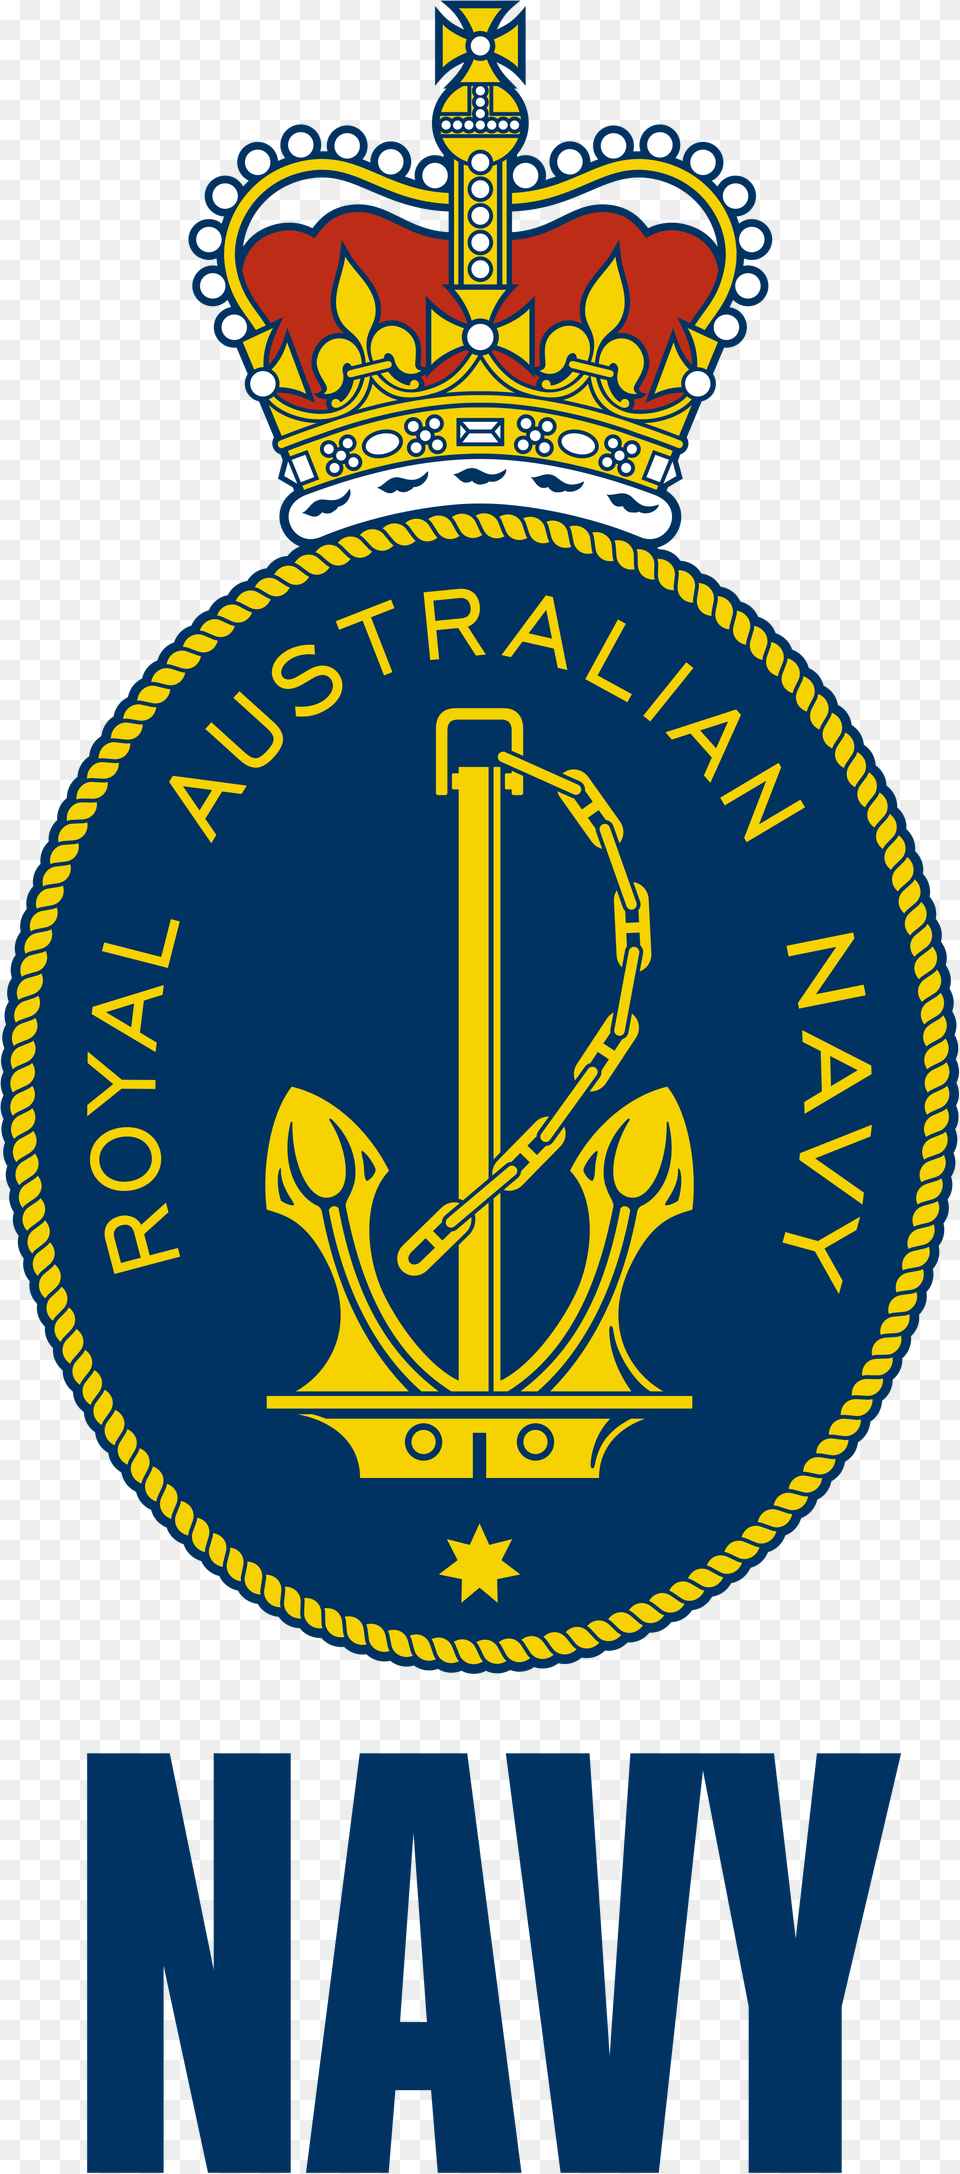 Clip Art File Of The Australian Royal Australian Navy Badge, Logo, Symbol, Electronics, Emblem Png Image